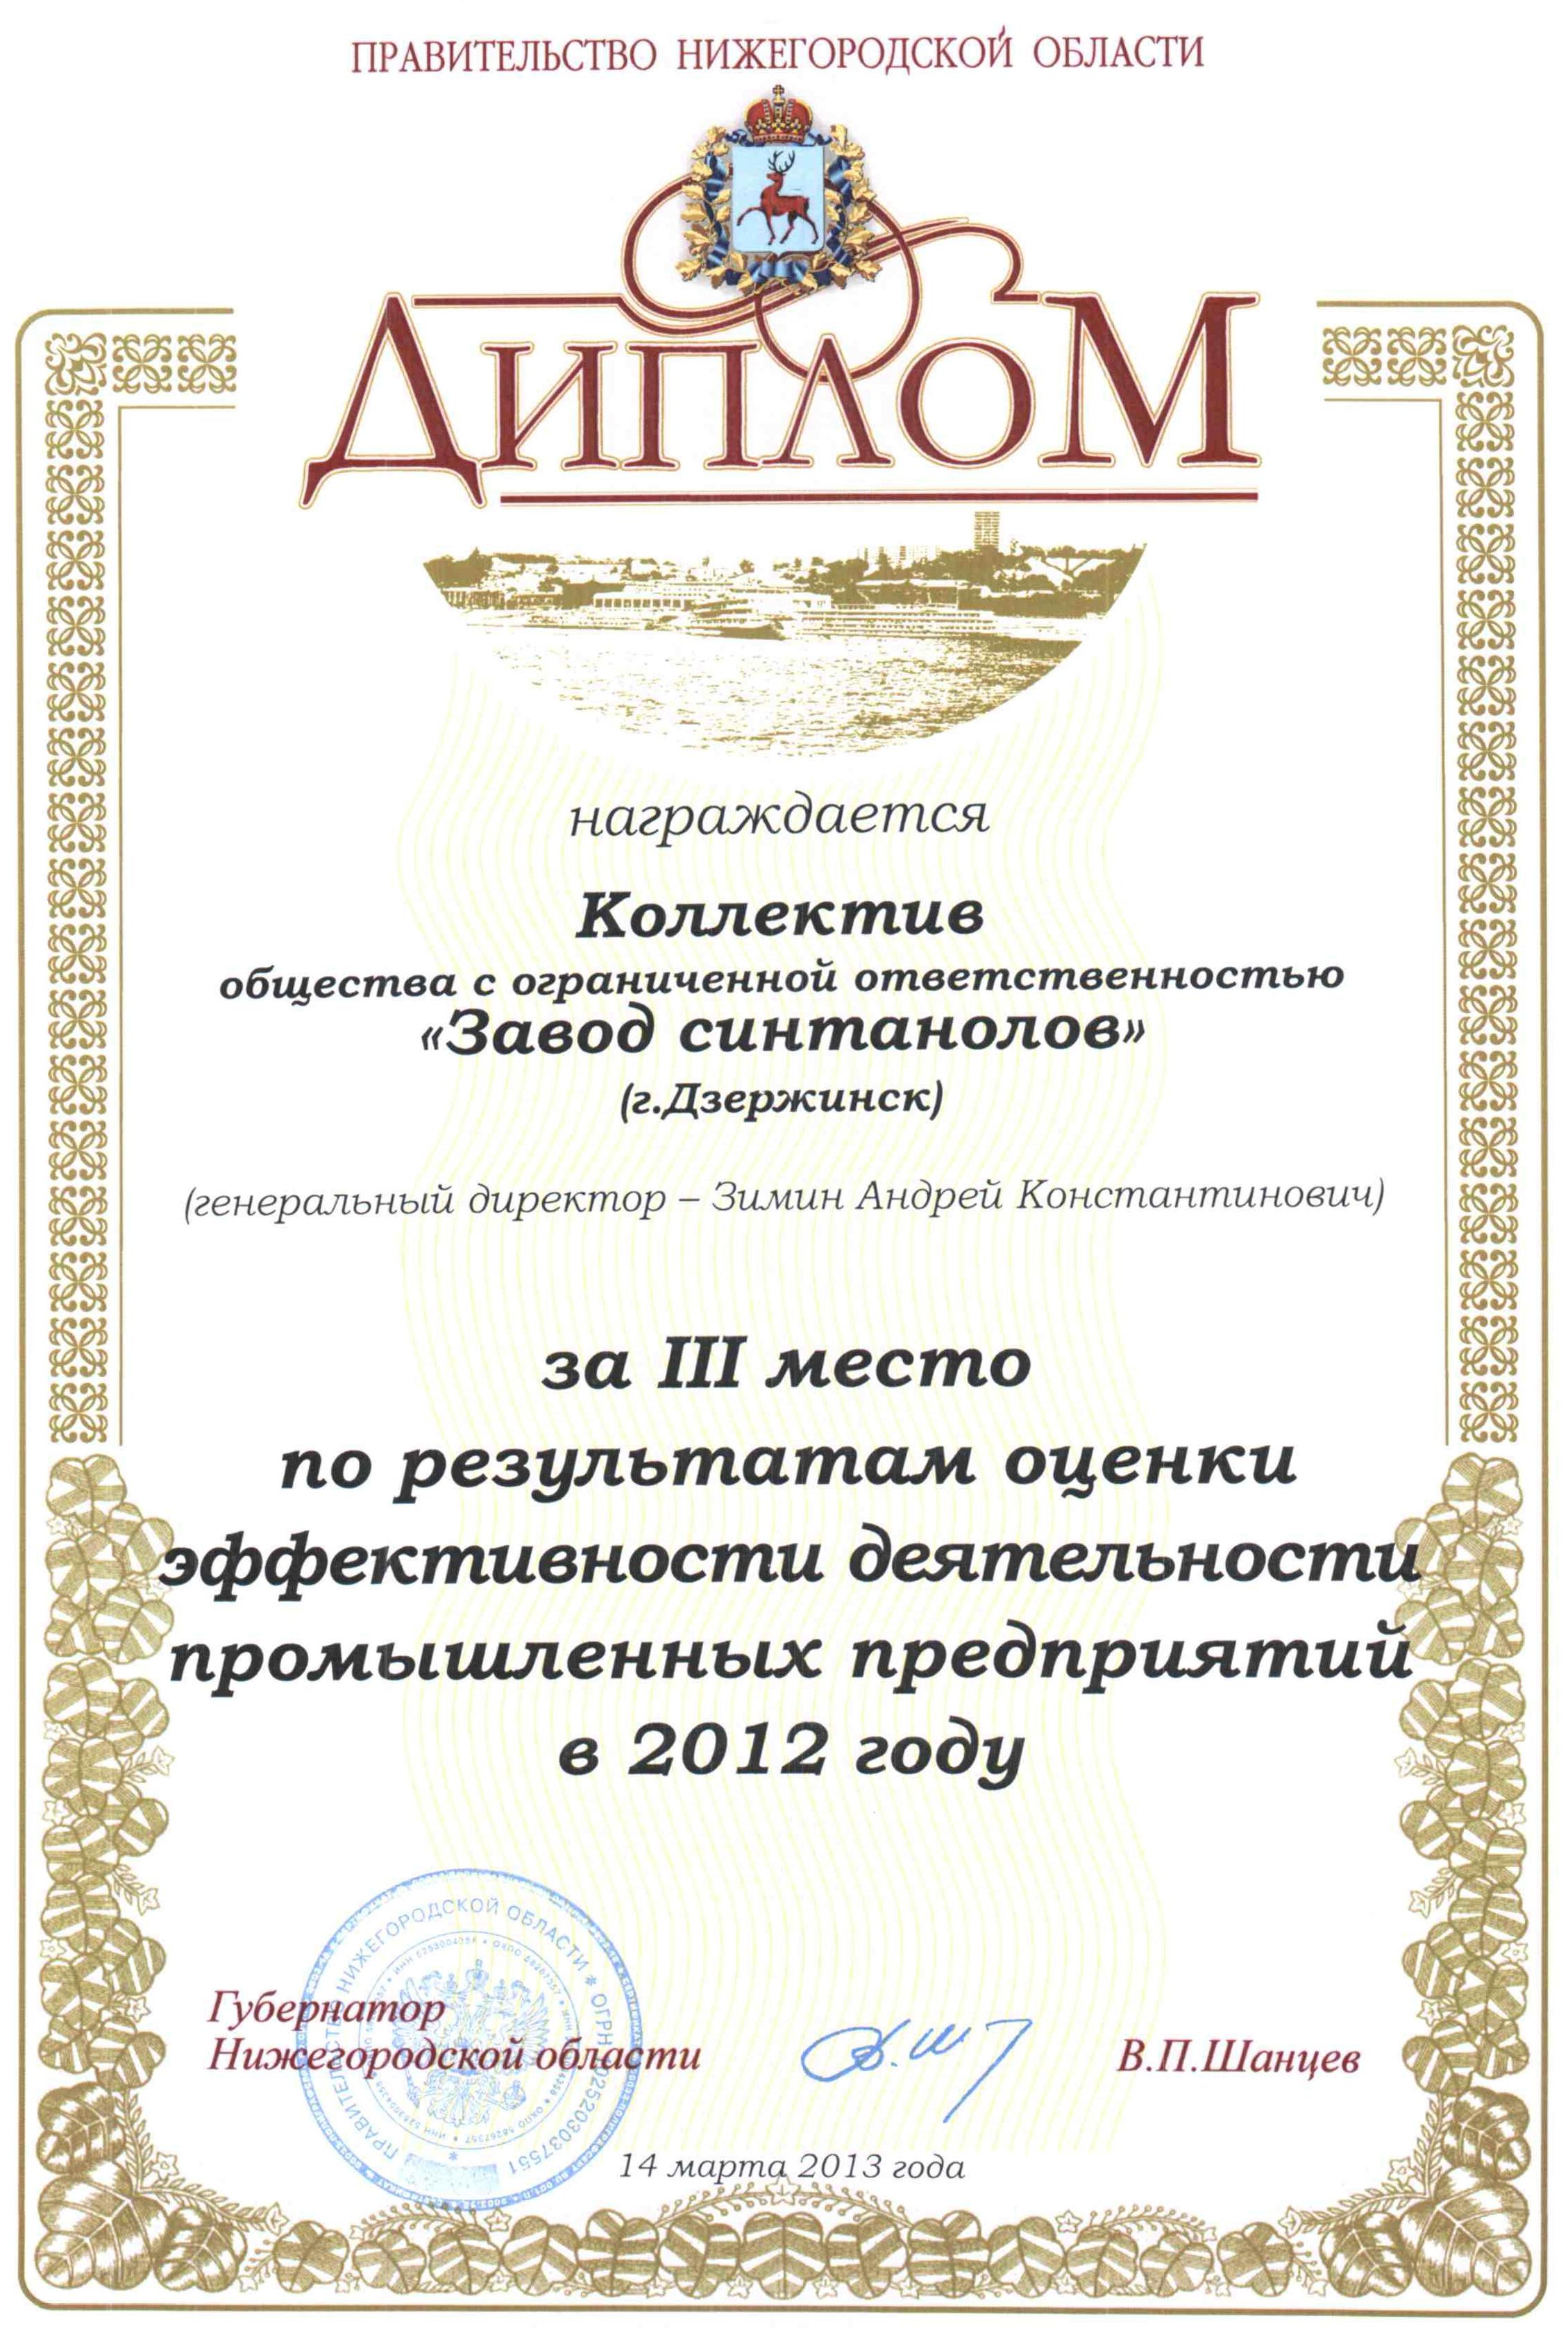 The Government of Nizhny Novgorod region has honored the work of Zavod sintanolov LLC personnel